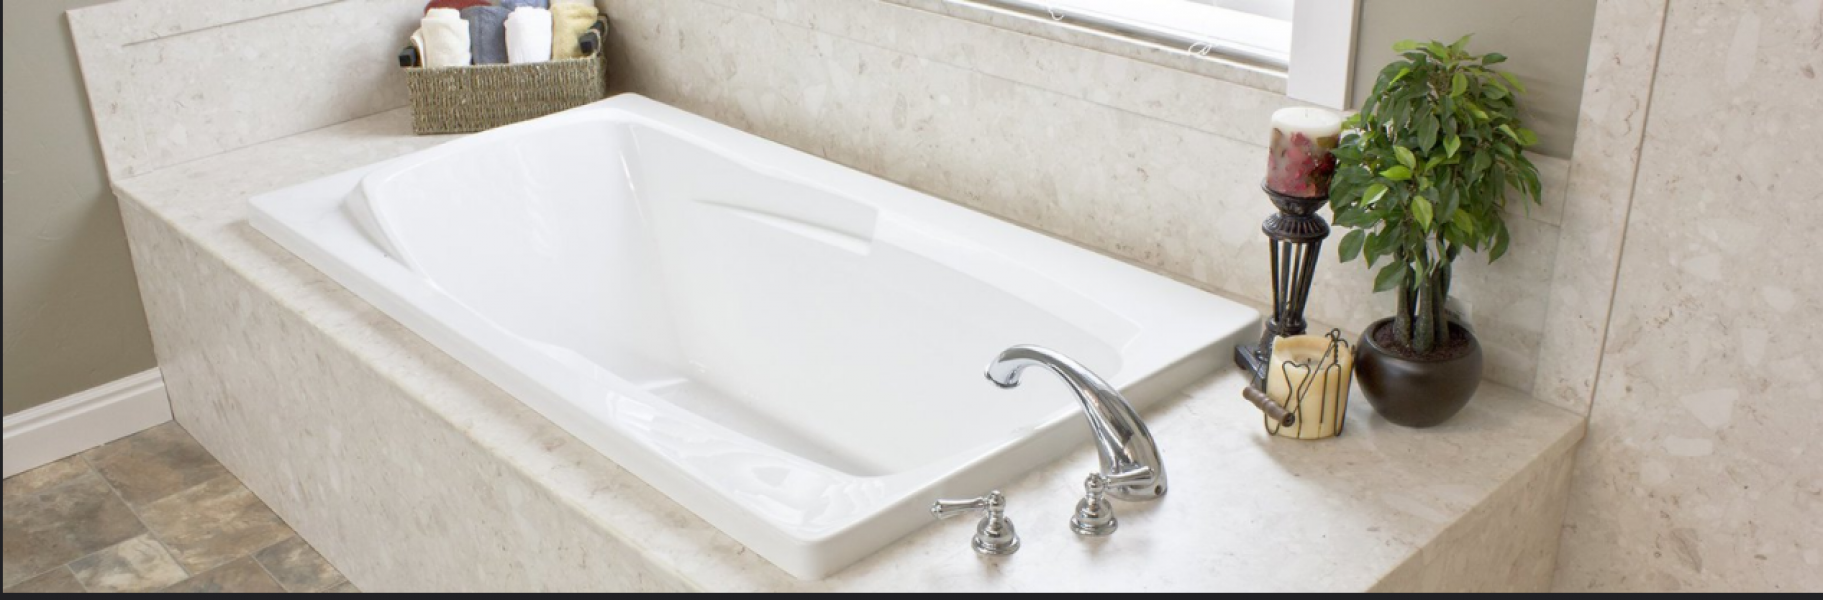 Five Star Bath Solutions of Kansas City MO